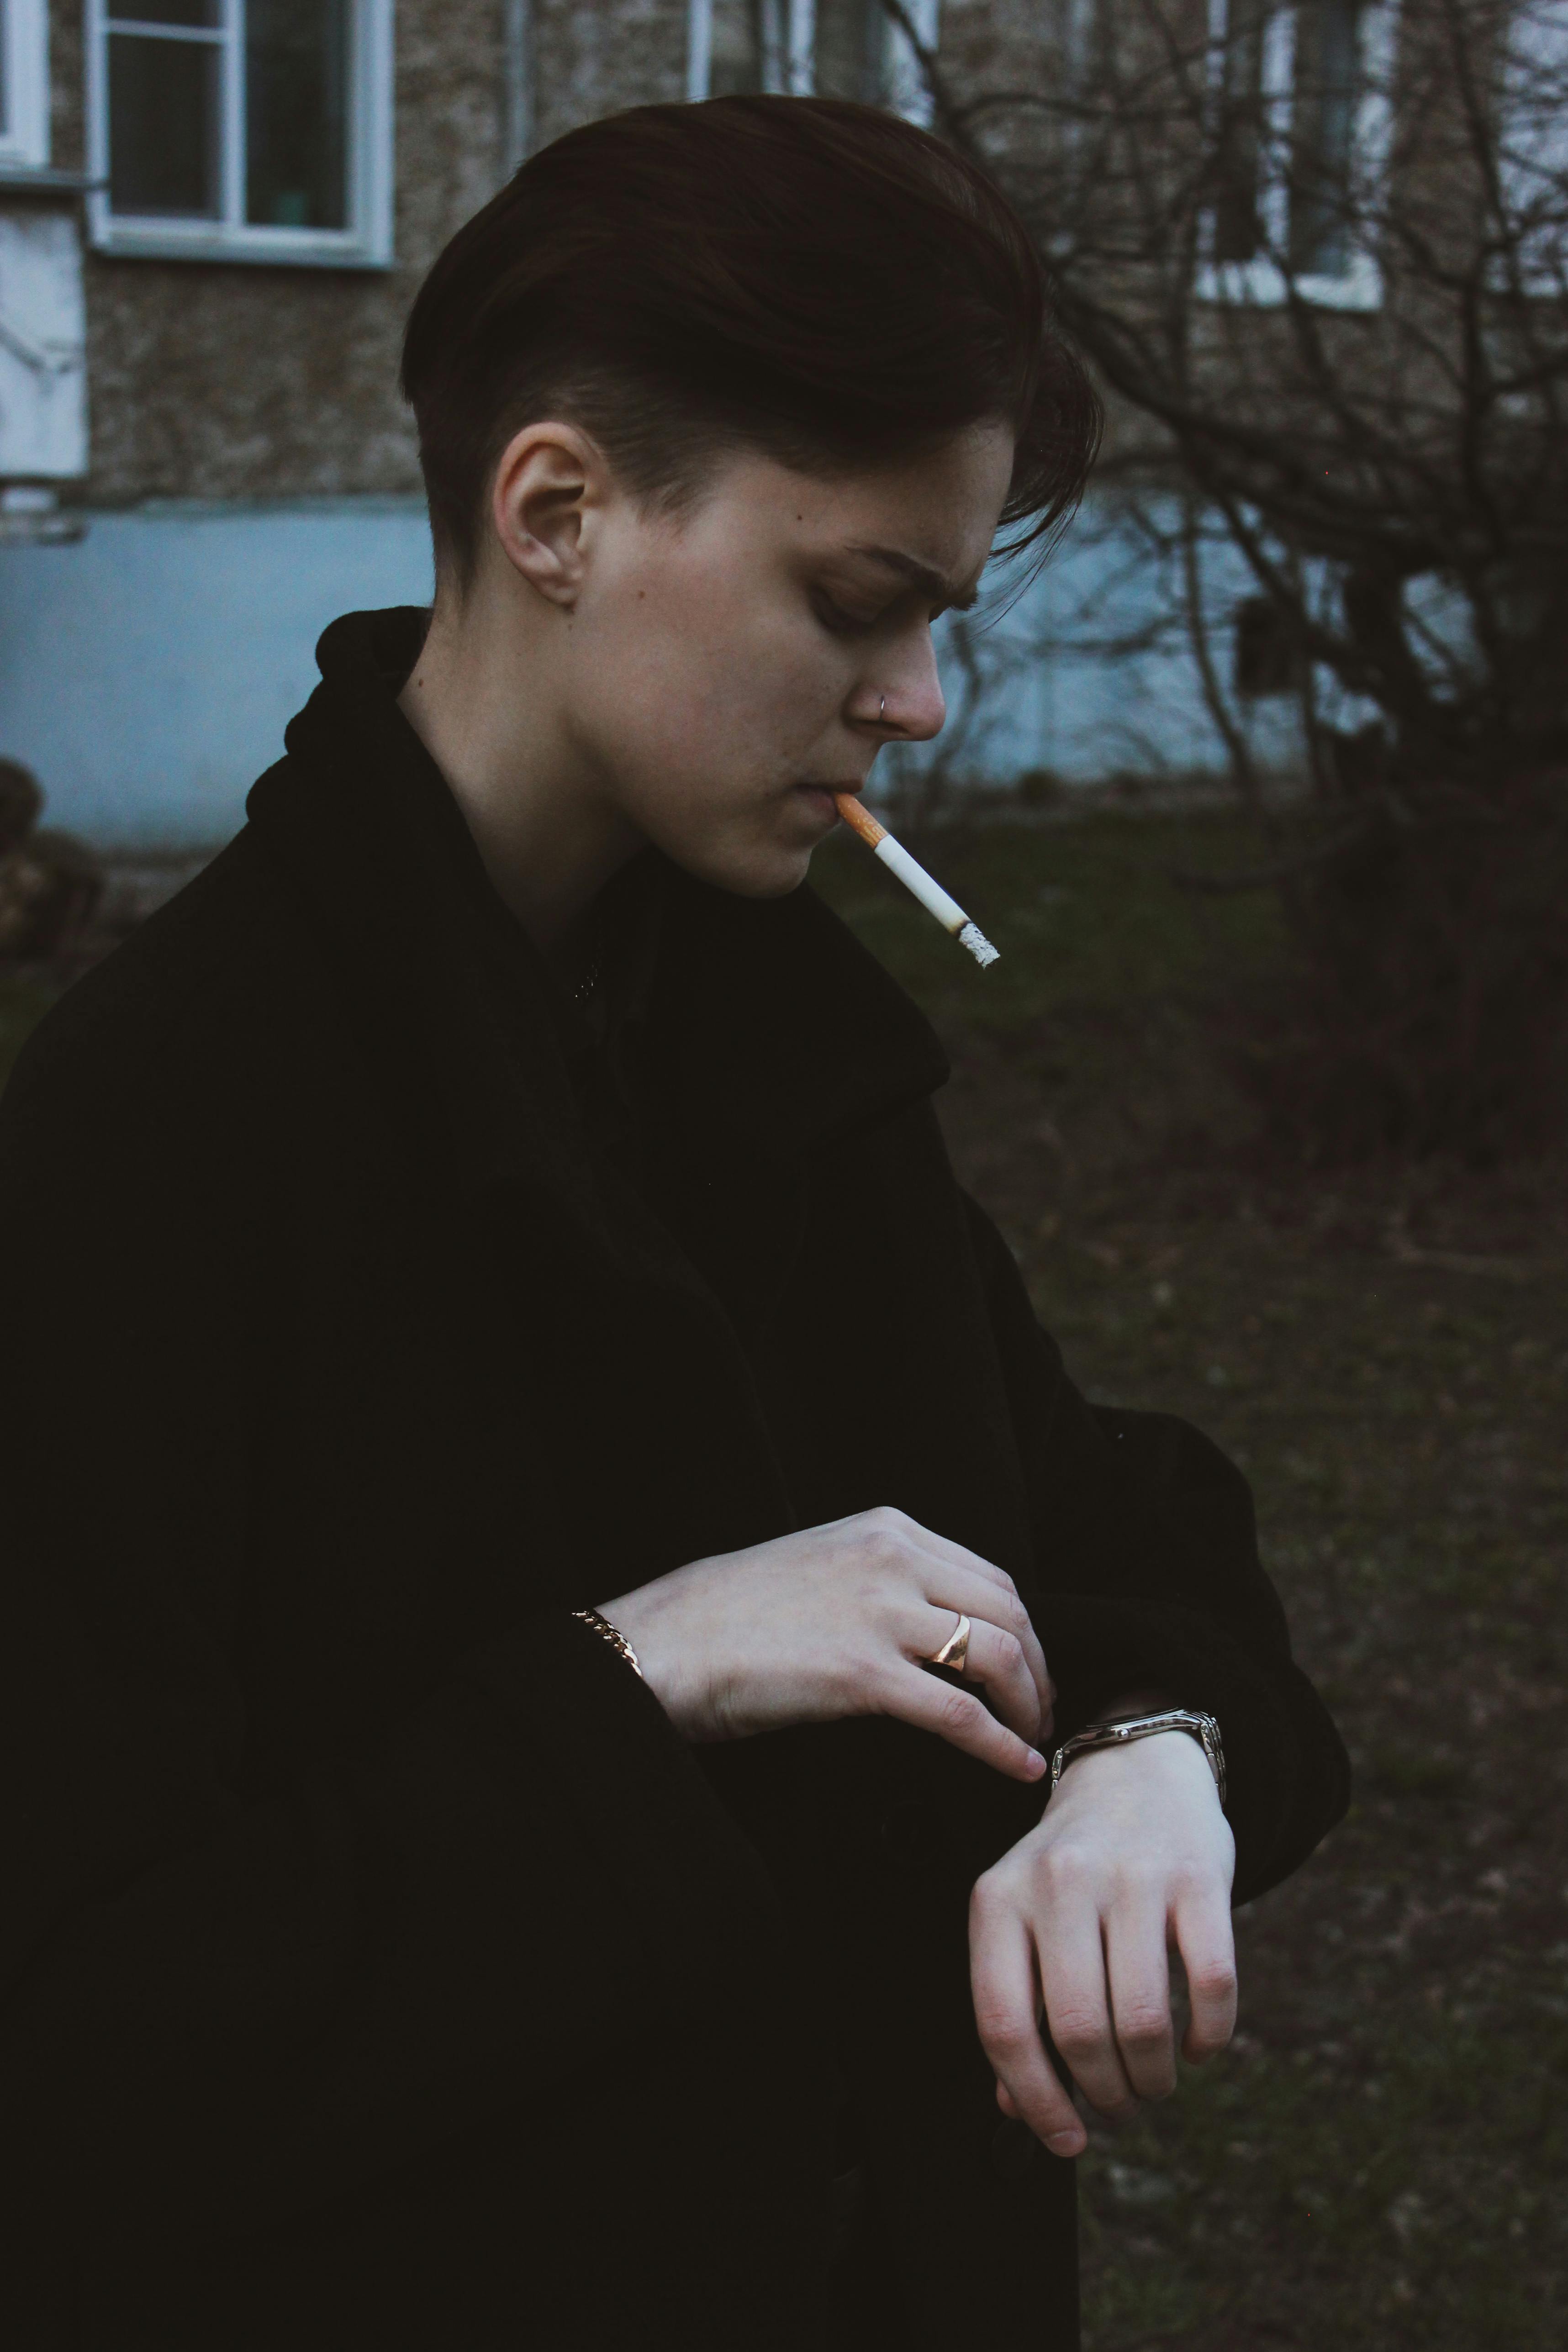 diann fields recommends Women Smoking Cigarettes Tumblr